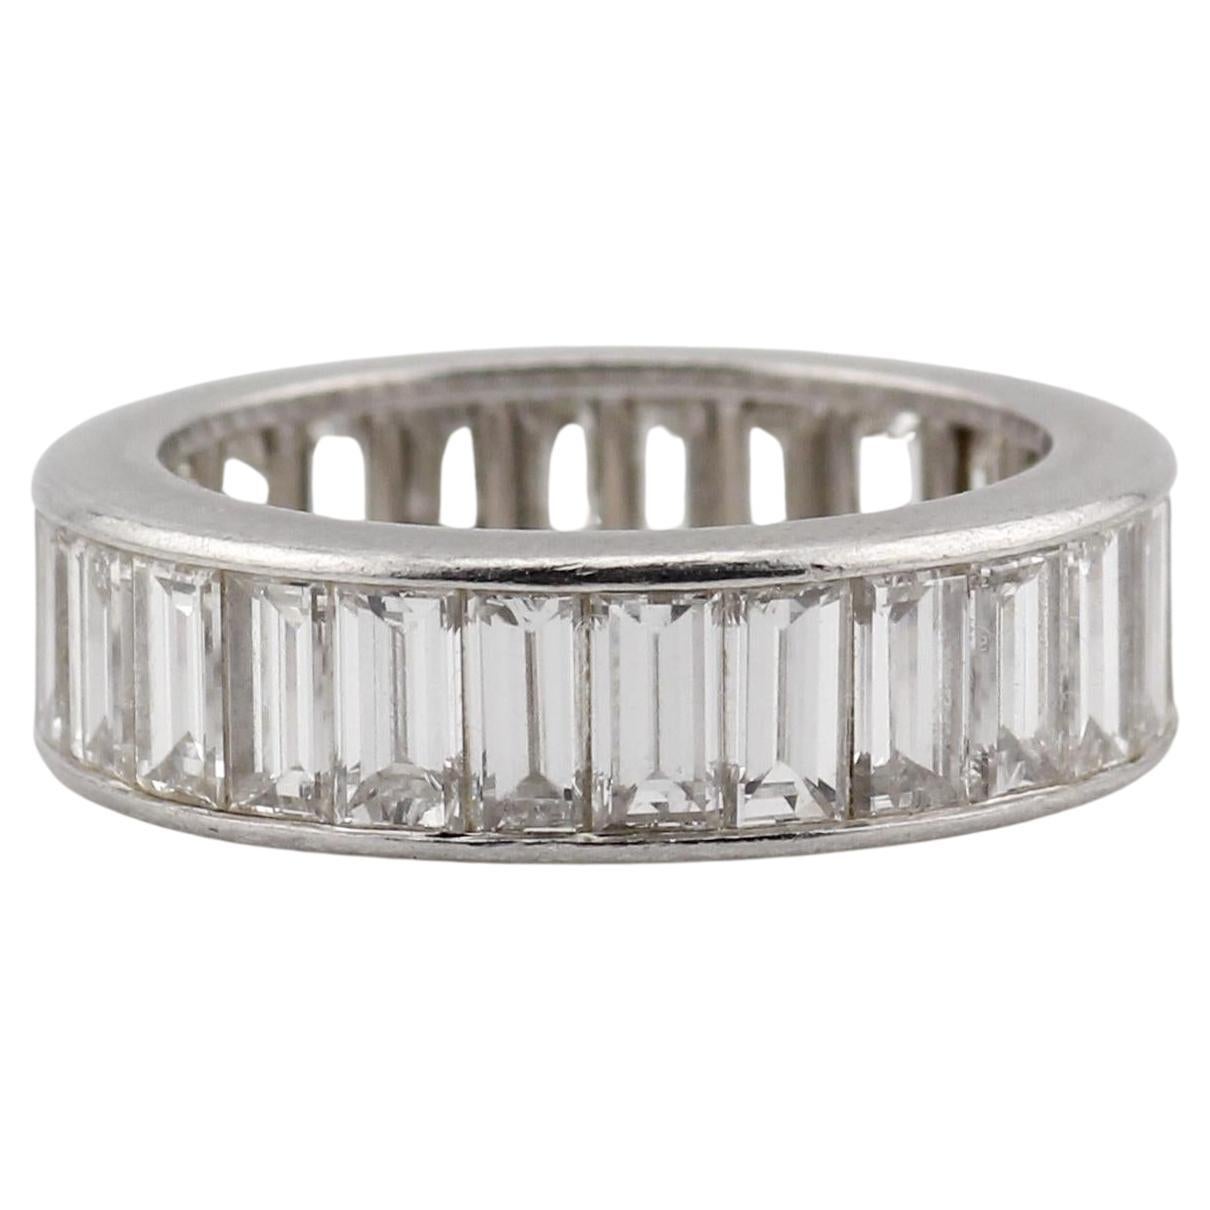 Van Cleef & Arpels Channel Set Baguette Diamond Platinum 6mm Band Ring Size 6.25